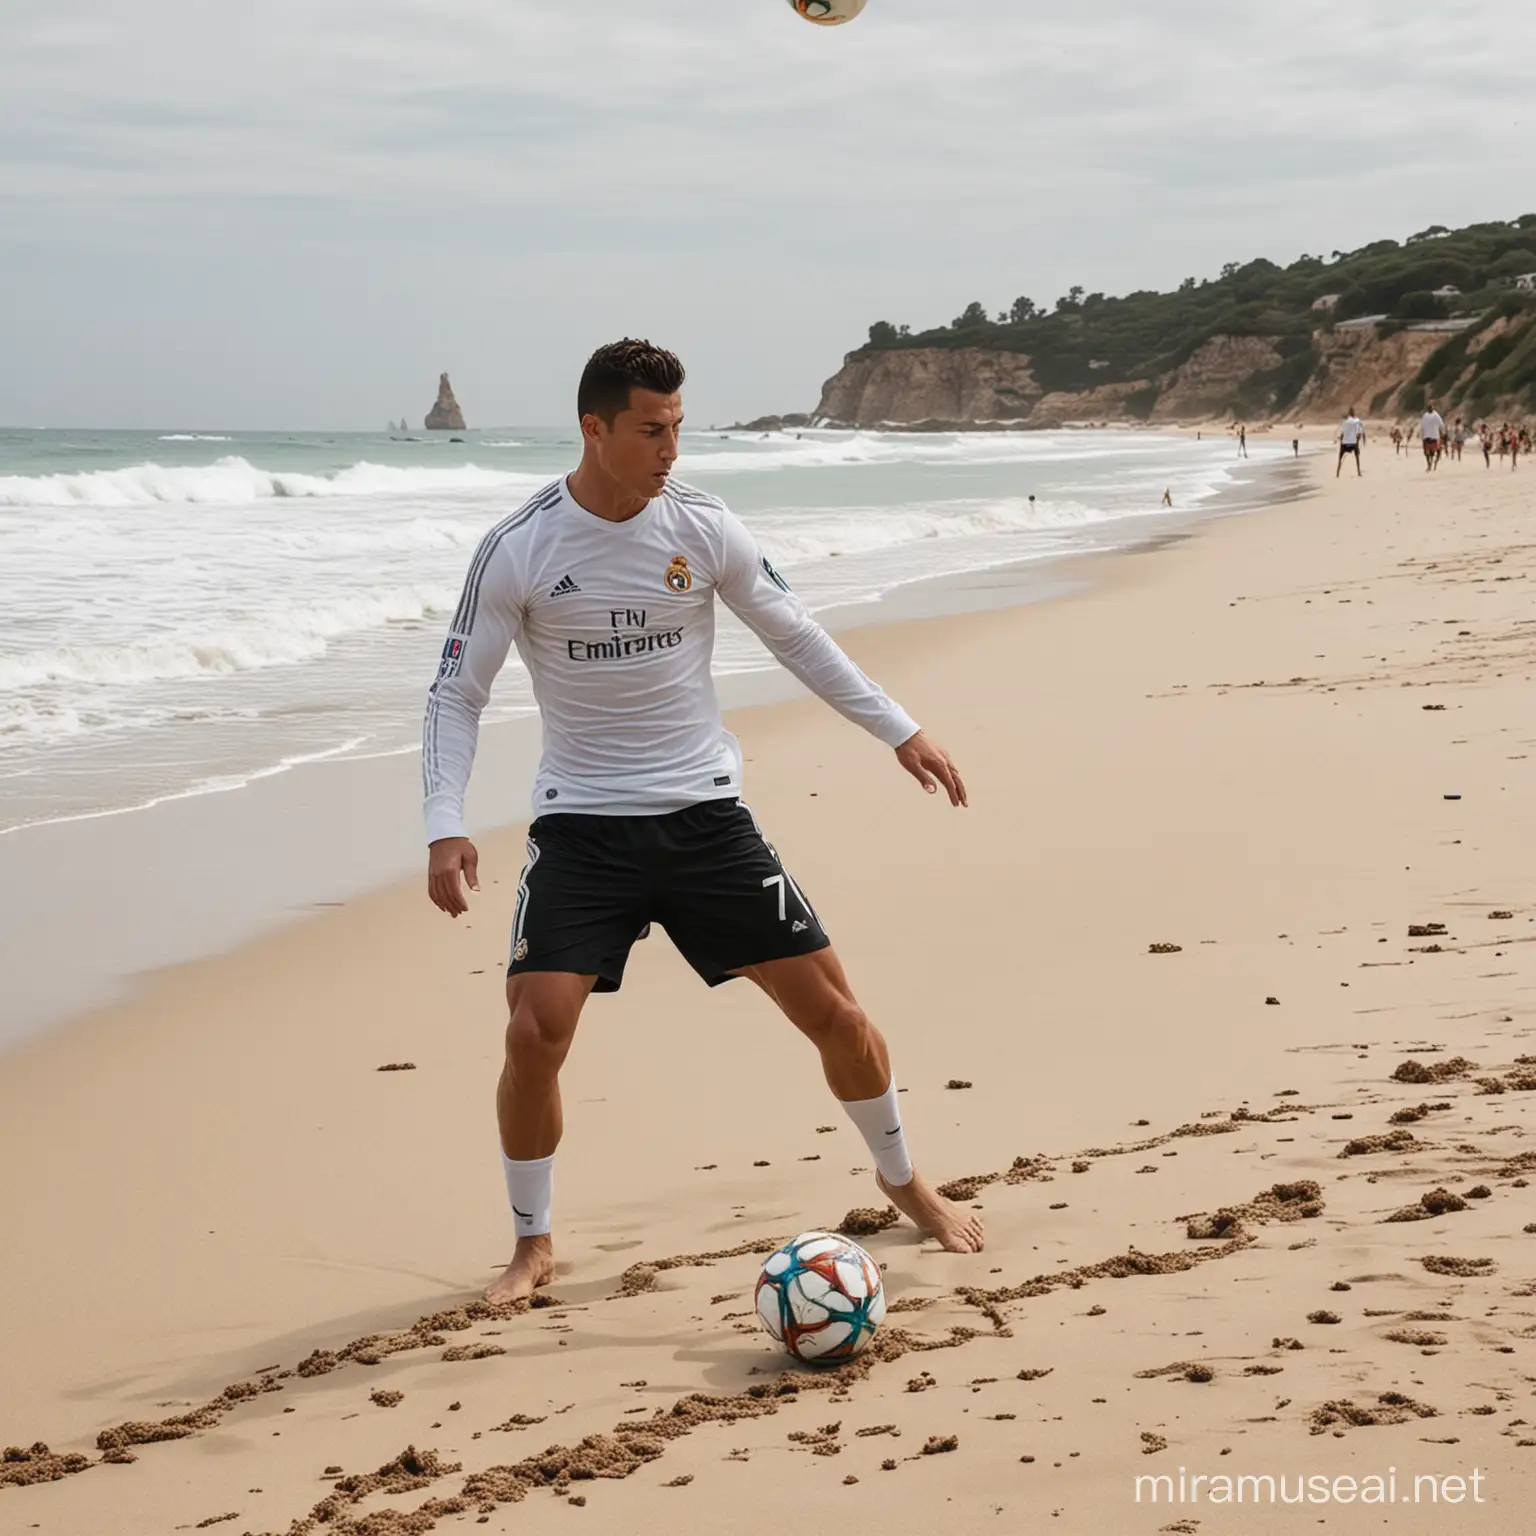 Cristiano Ronaldo Training Free Kicks on Secluded Beach